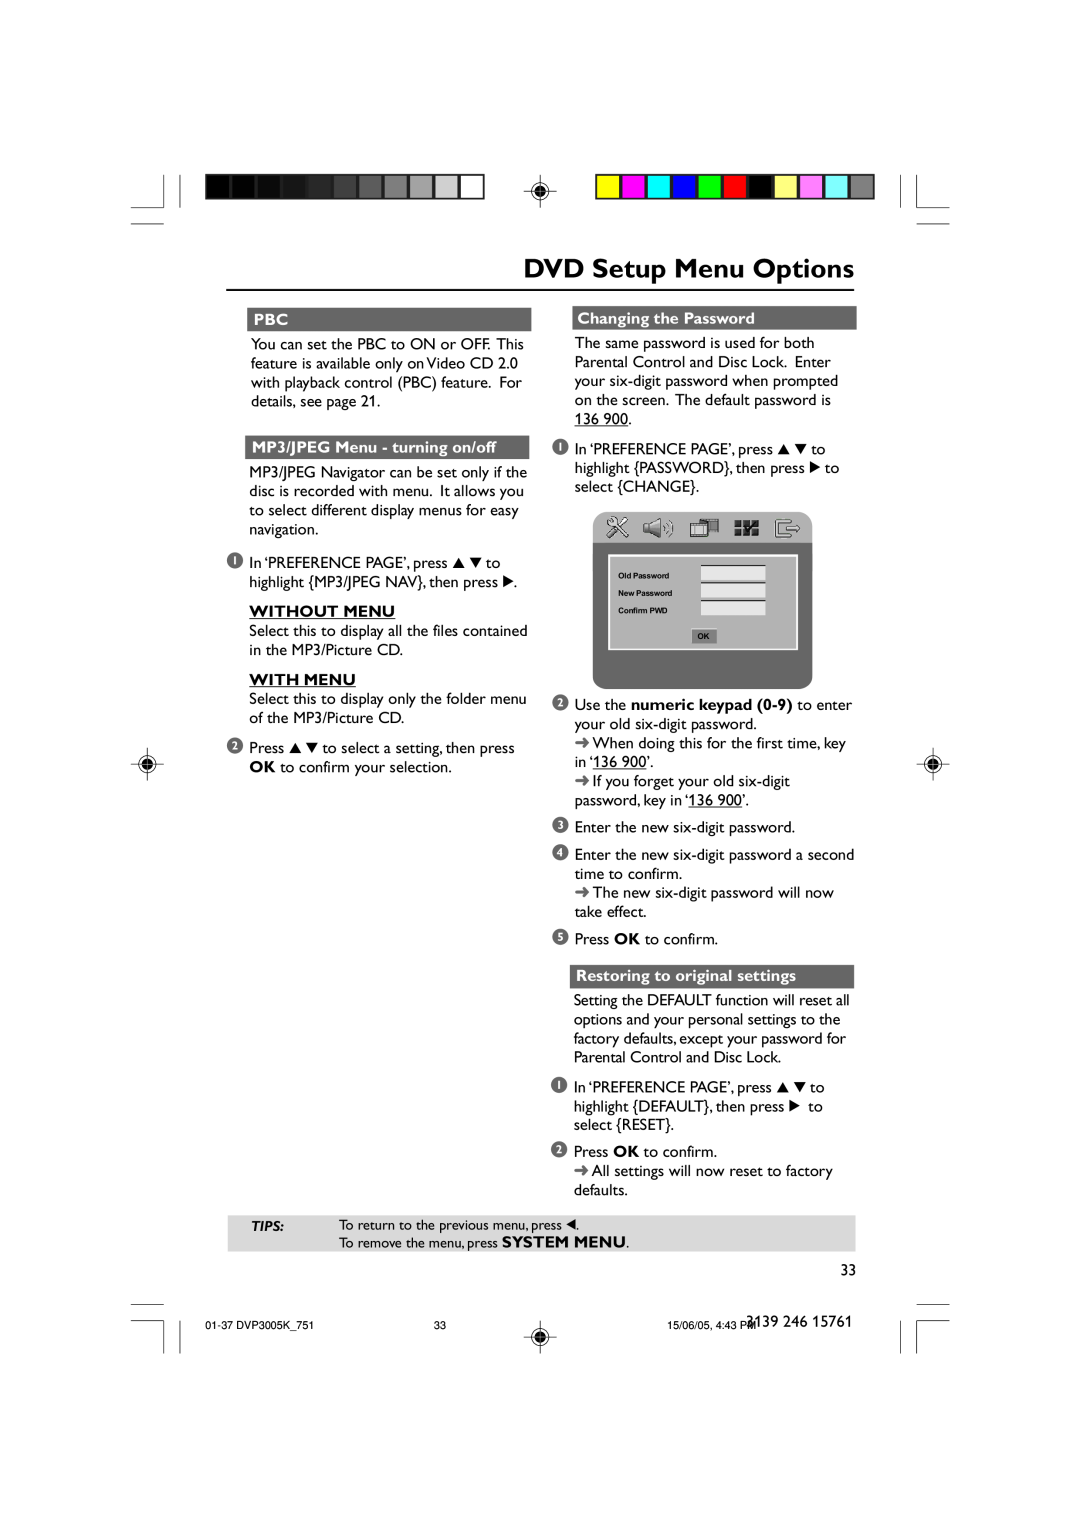 Philips DVP3005K/74 Changing the Password, MP3/JPEG Menu - turning on/off, Without Menu, With Menu, DVD Setup Menu Options 